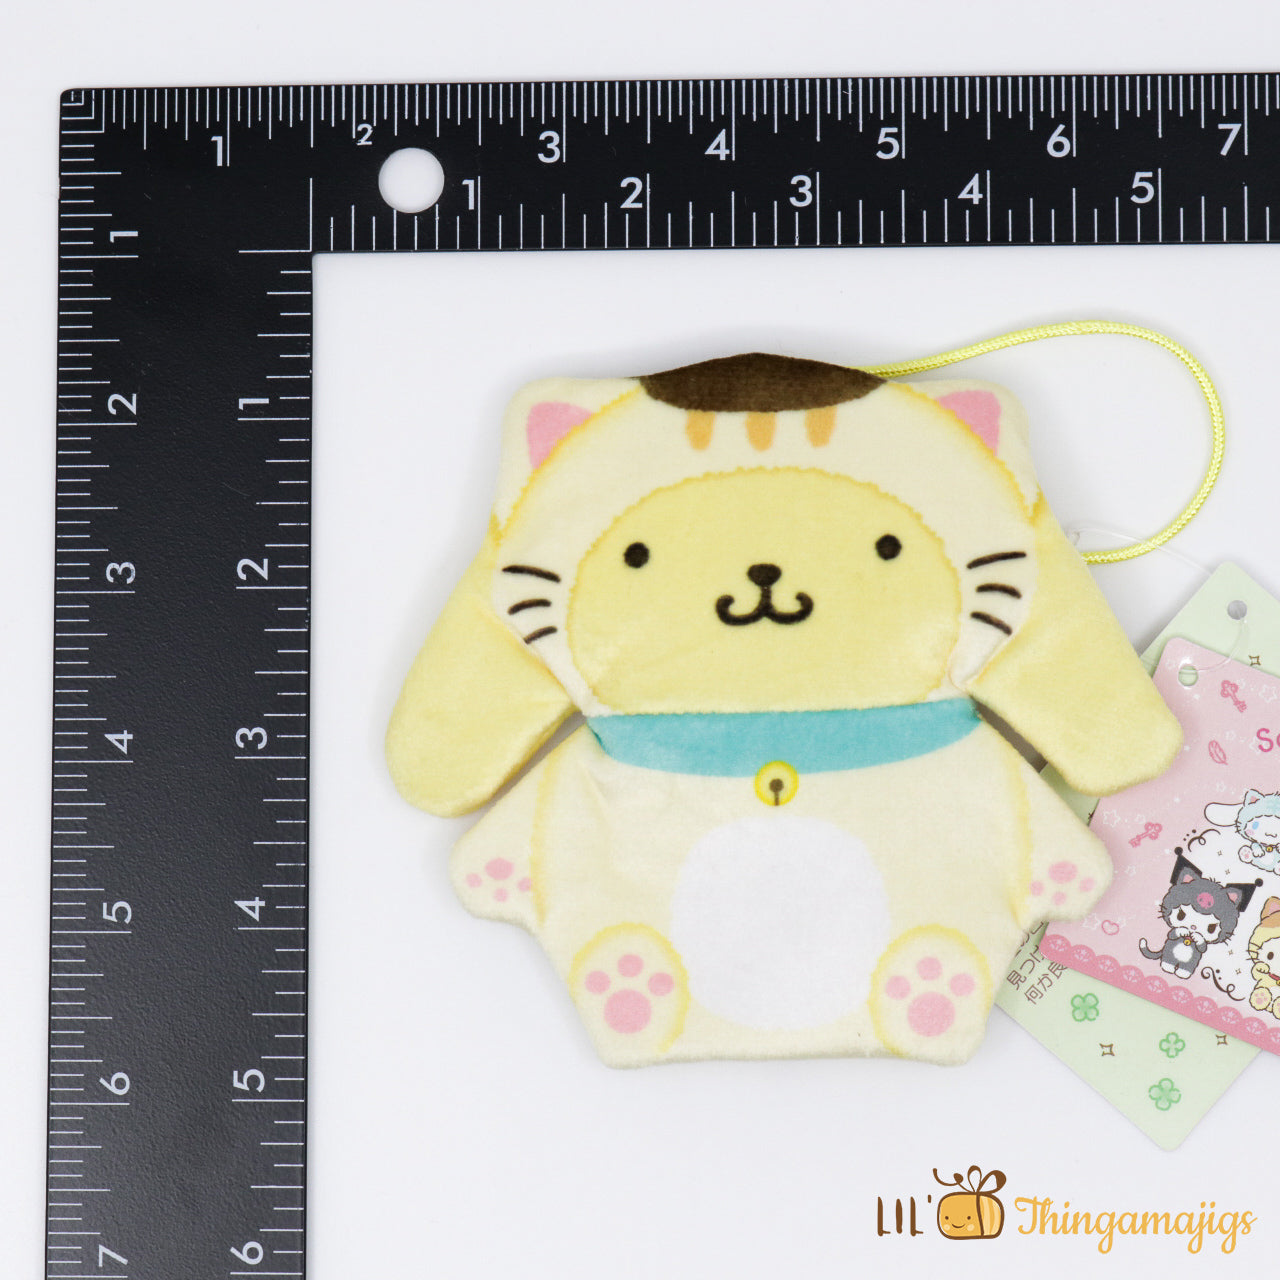 Sanrio Pompompurin Kitty Costum Coin Pouch 4.5" (Sanrio Japan Original)